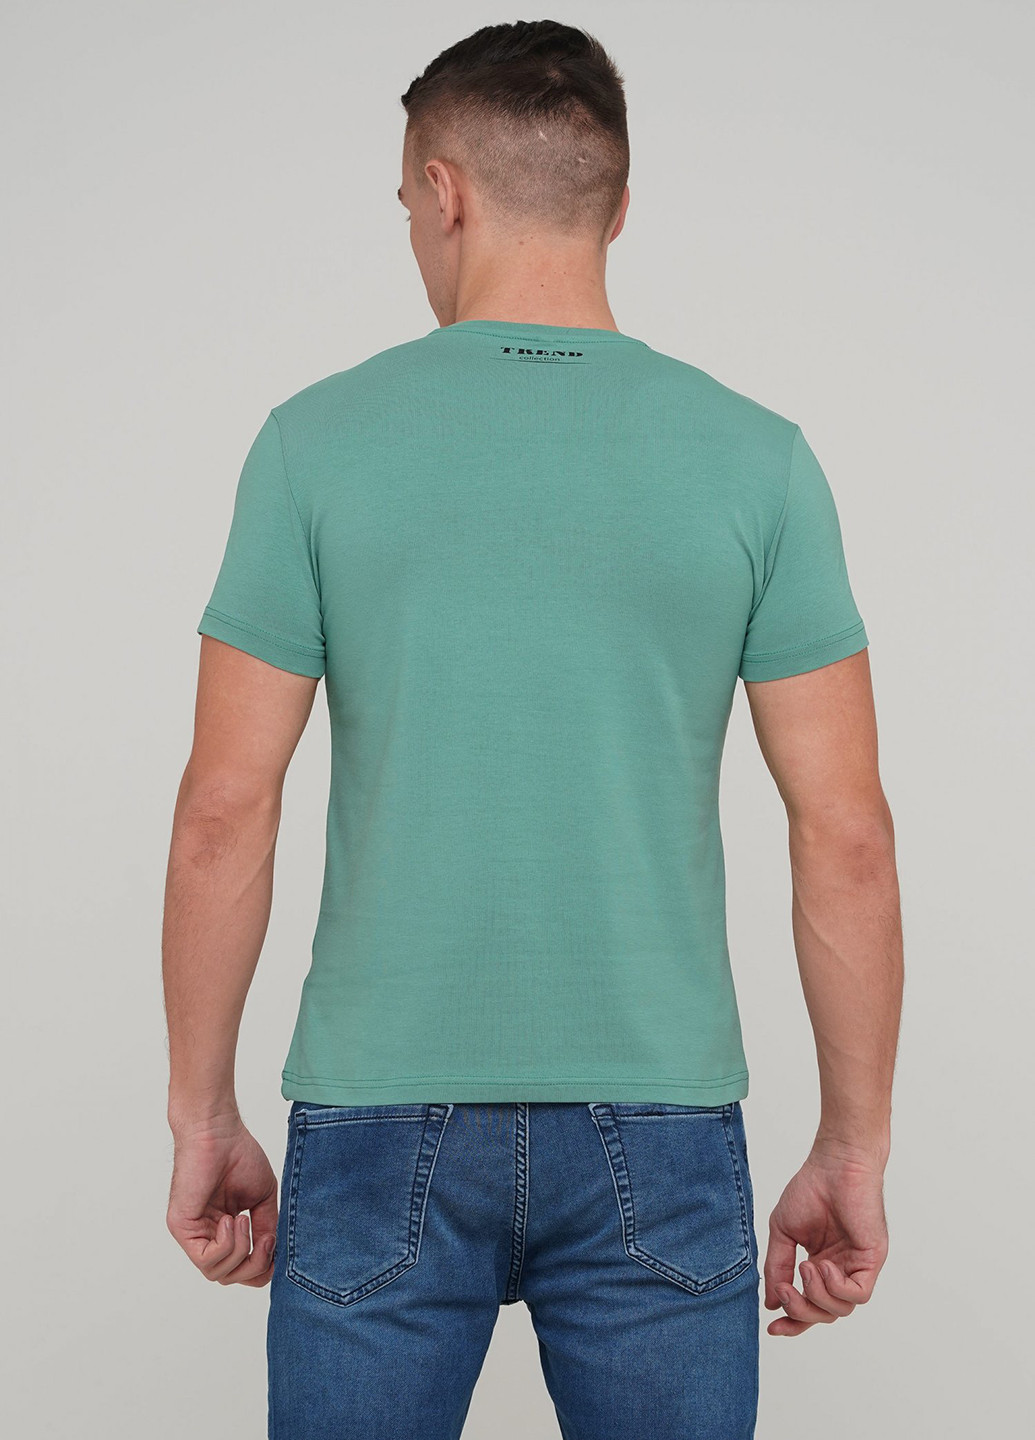 Светло-зеленая футболка Trend Collection